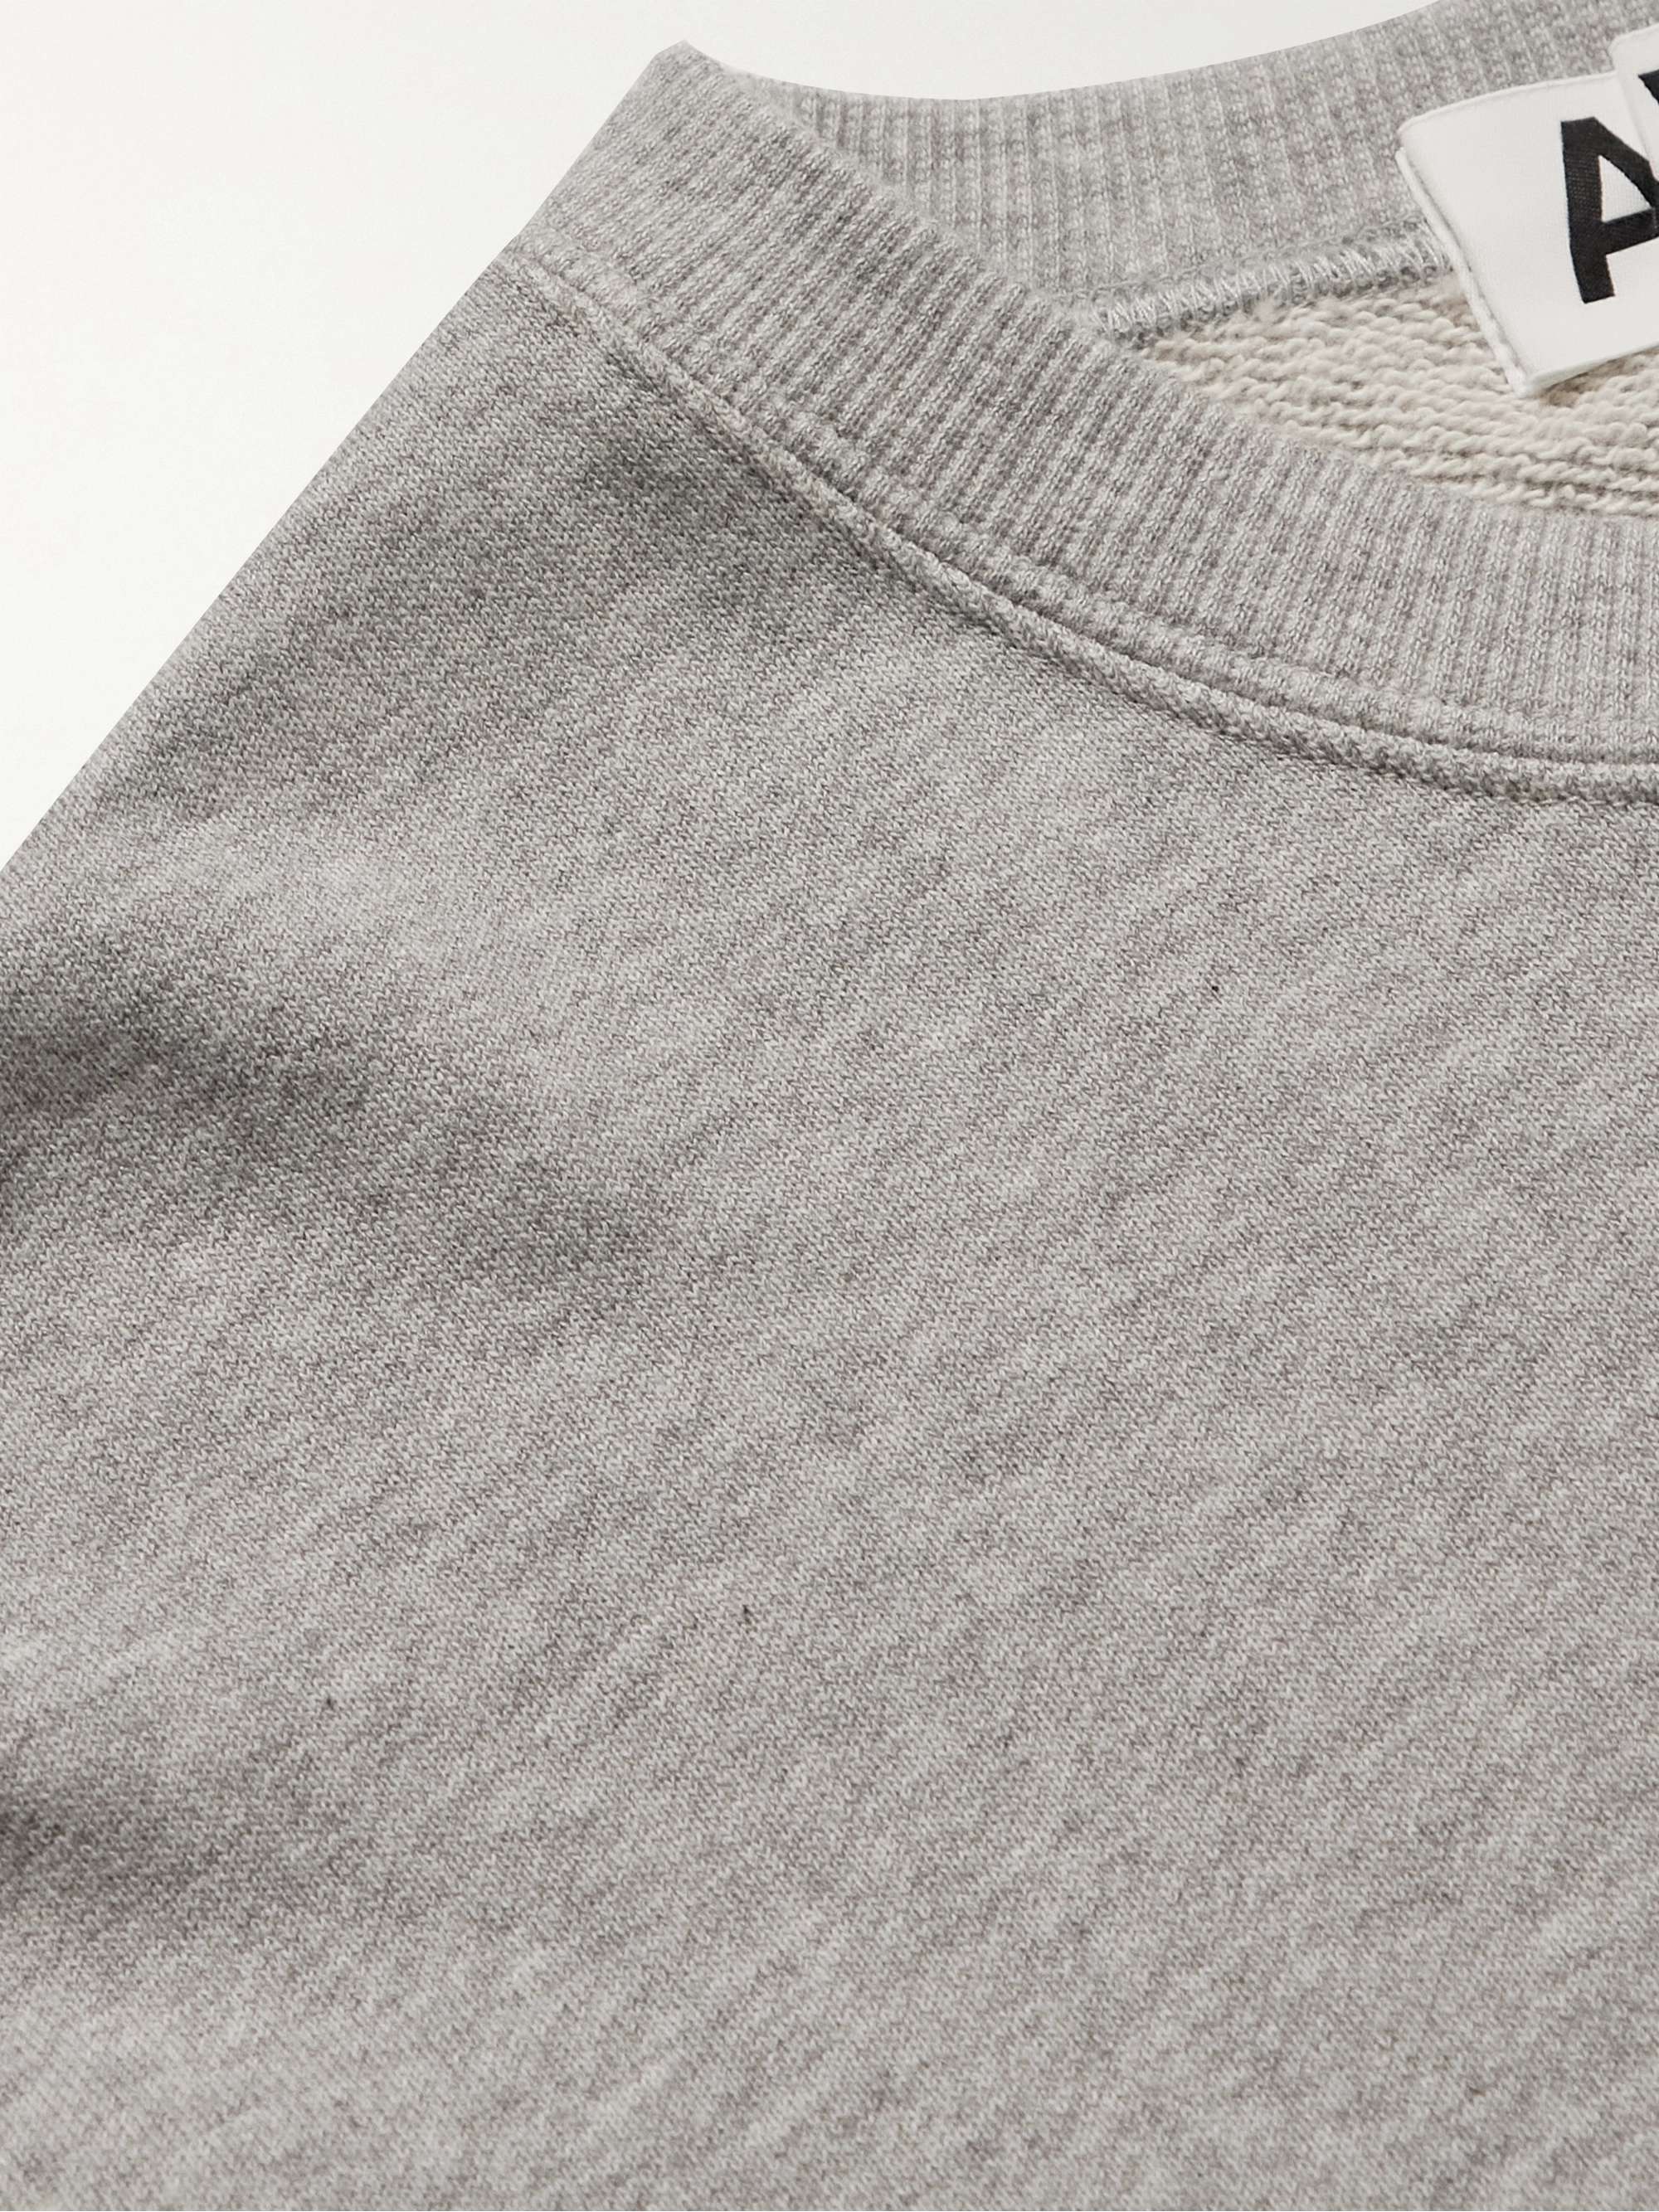 ALOYE Colour-Block Panelled Cotton-Jersey Sweater